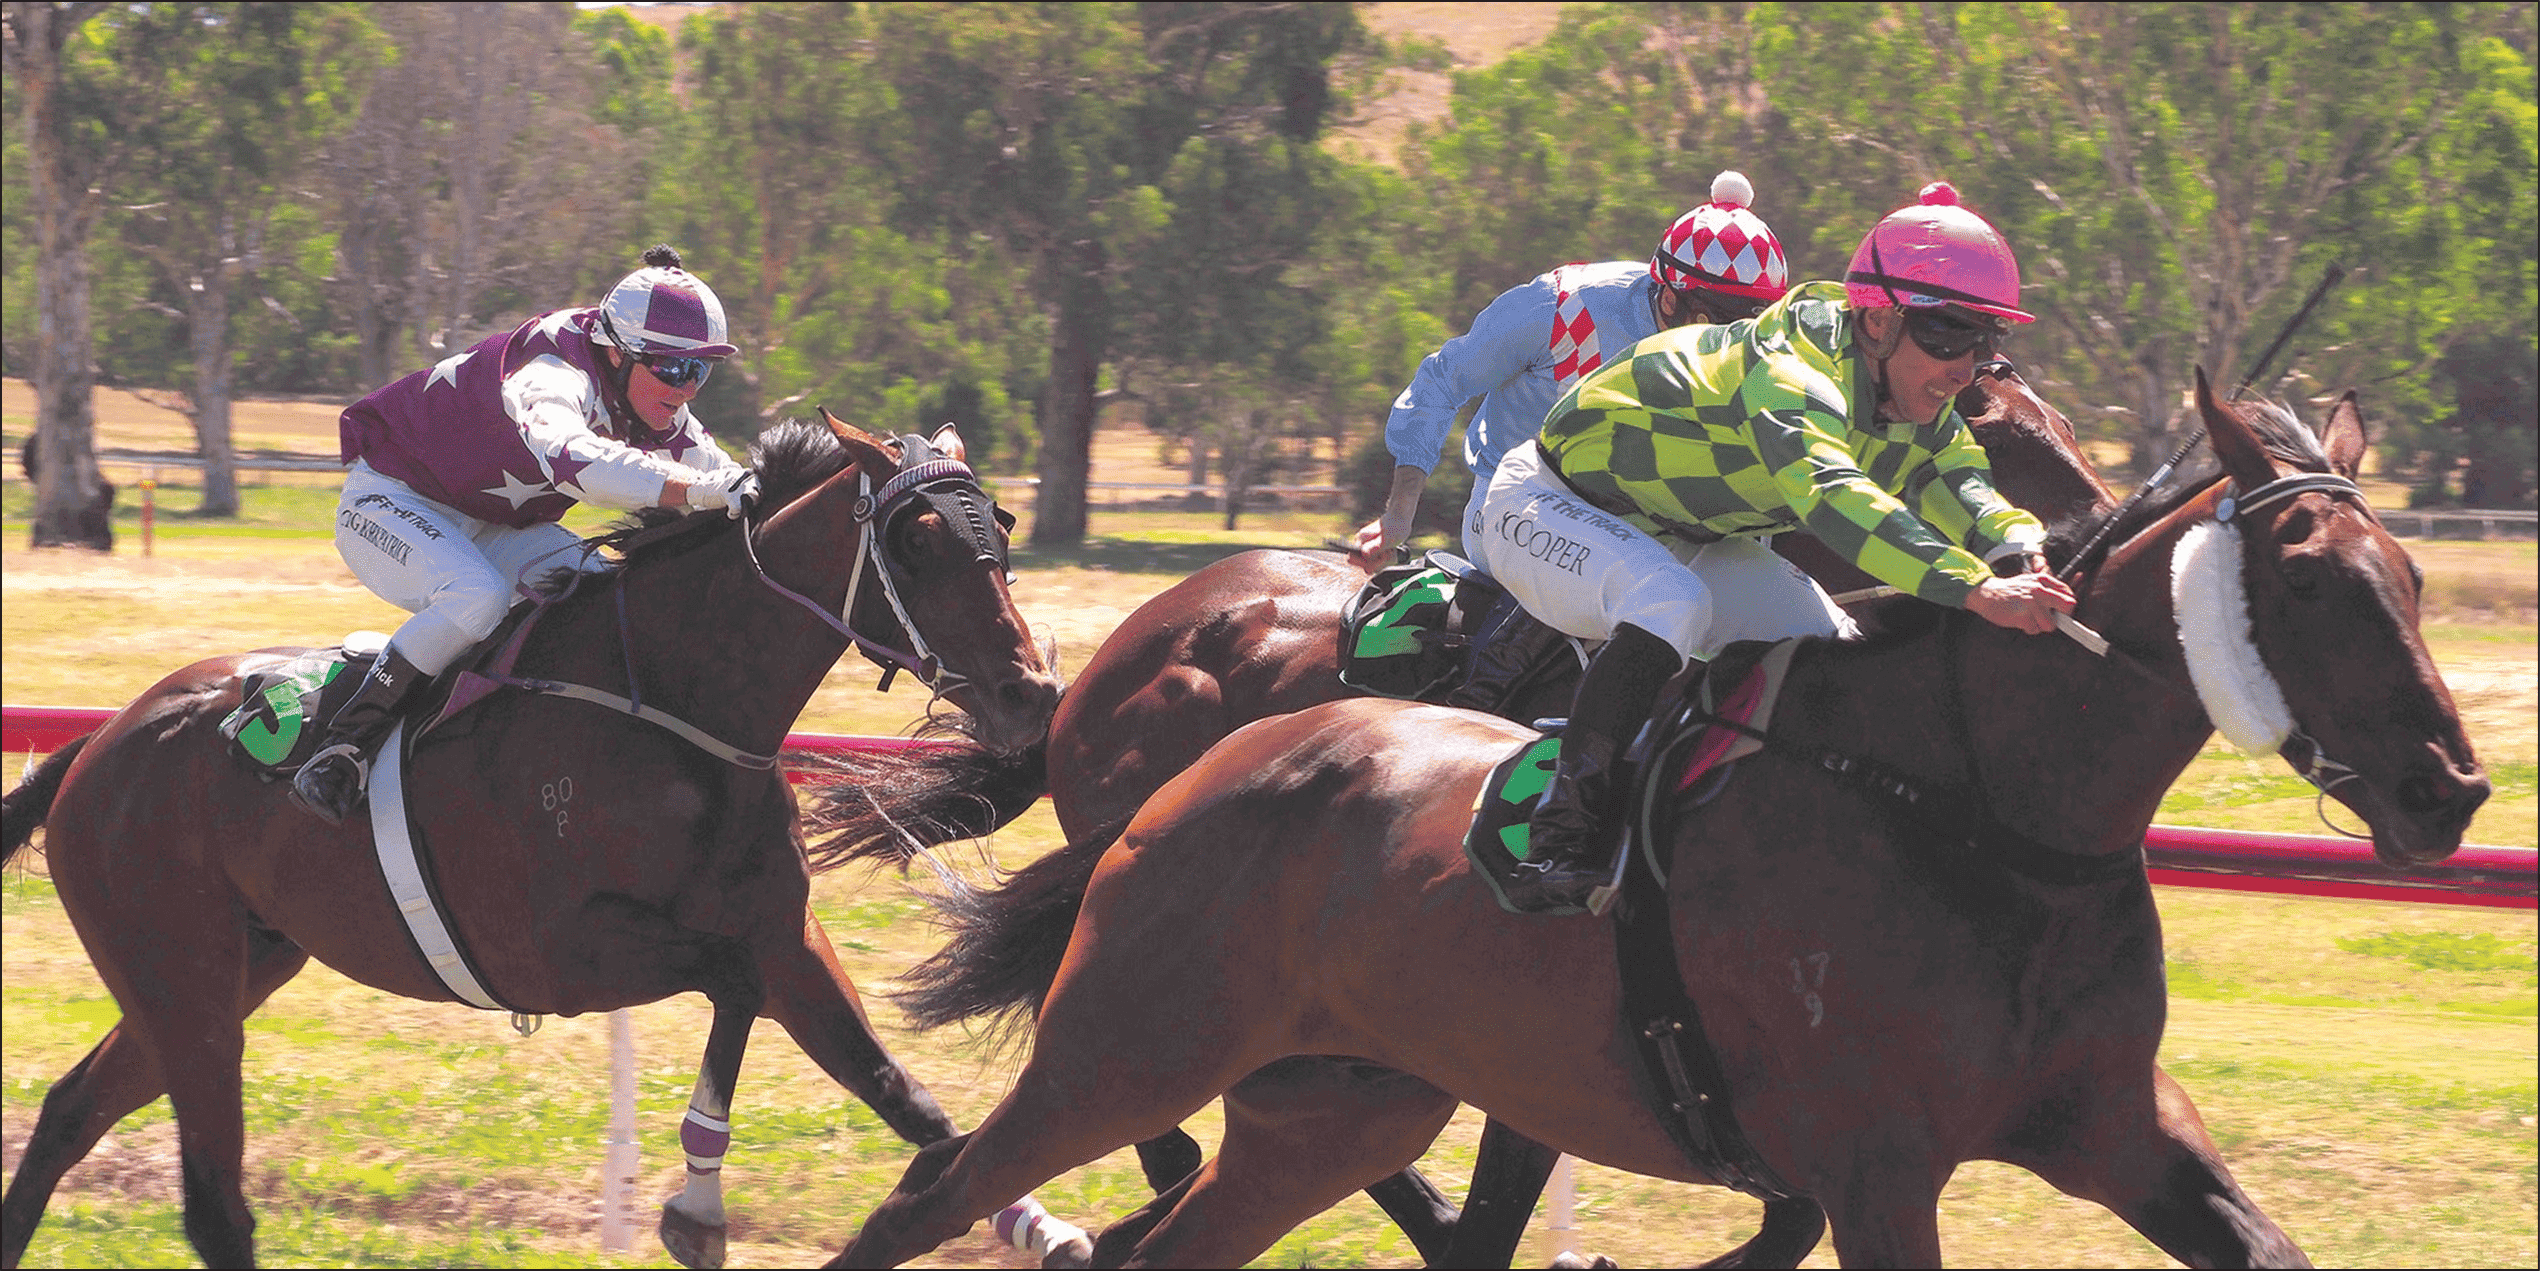 Horses racing towards the finish line. -MP